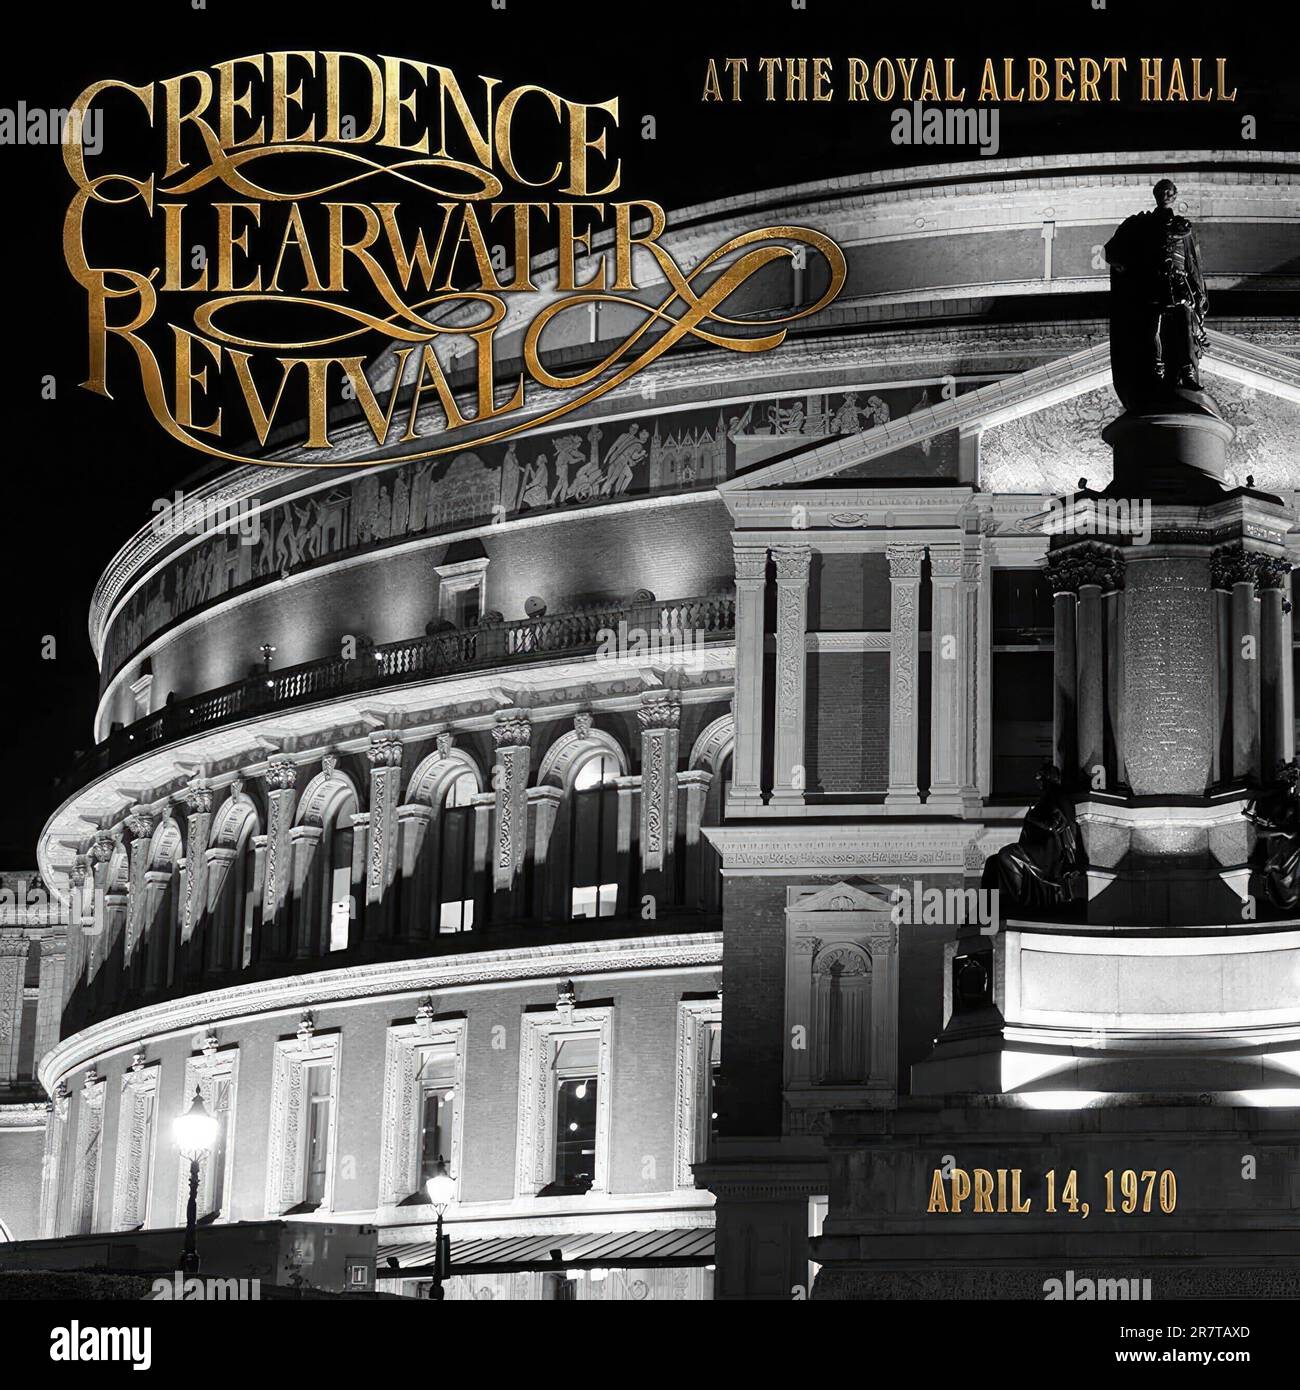 Portada de album Creedence Clearwater Revival - At The Royal Albert Hall (April 14, 1970)Género:Rock Estilo:Country Rock, Rock & Roll, Pop Rock'. Stock Photo